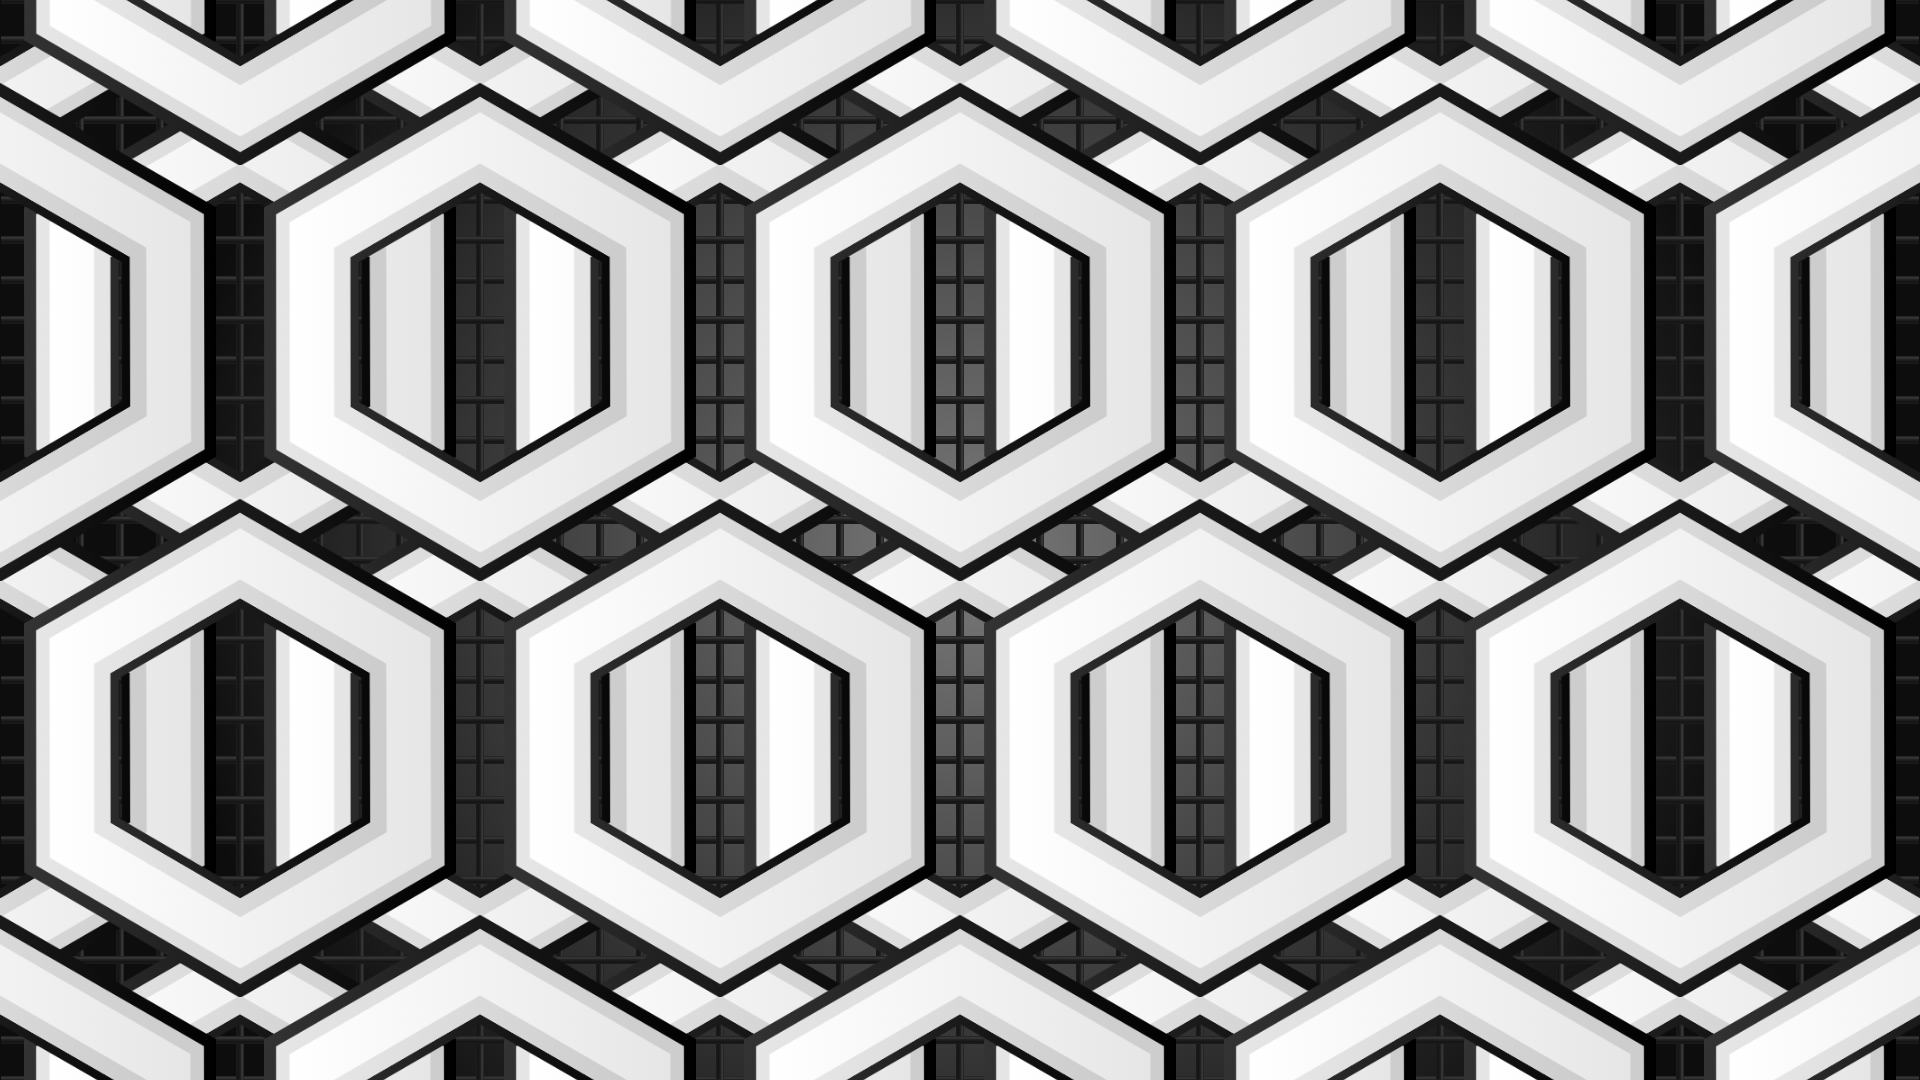 General 1920x1080 geometry geometric figures colorful abstract CGI digital art pattern artwork shapes hexagon minimalism simple background gray